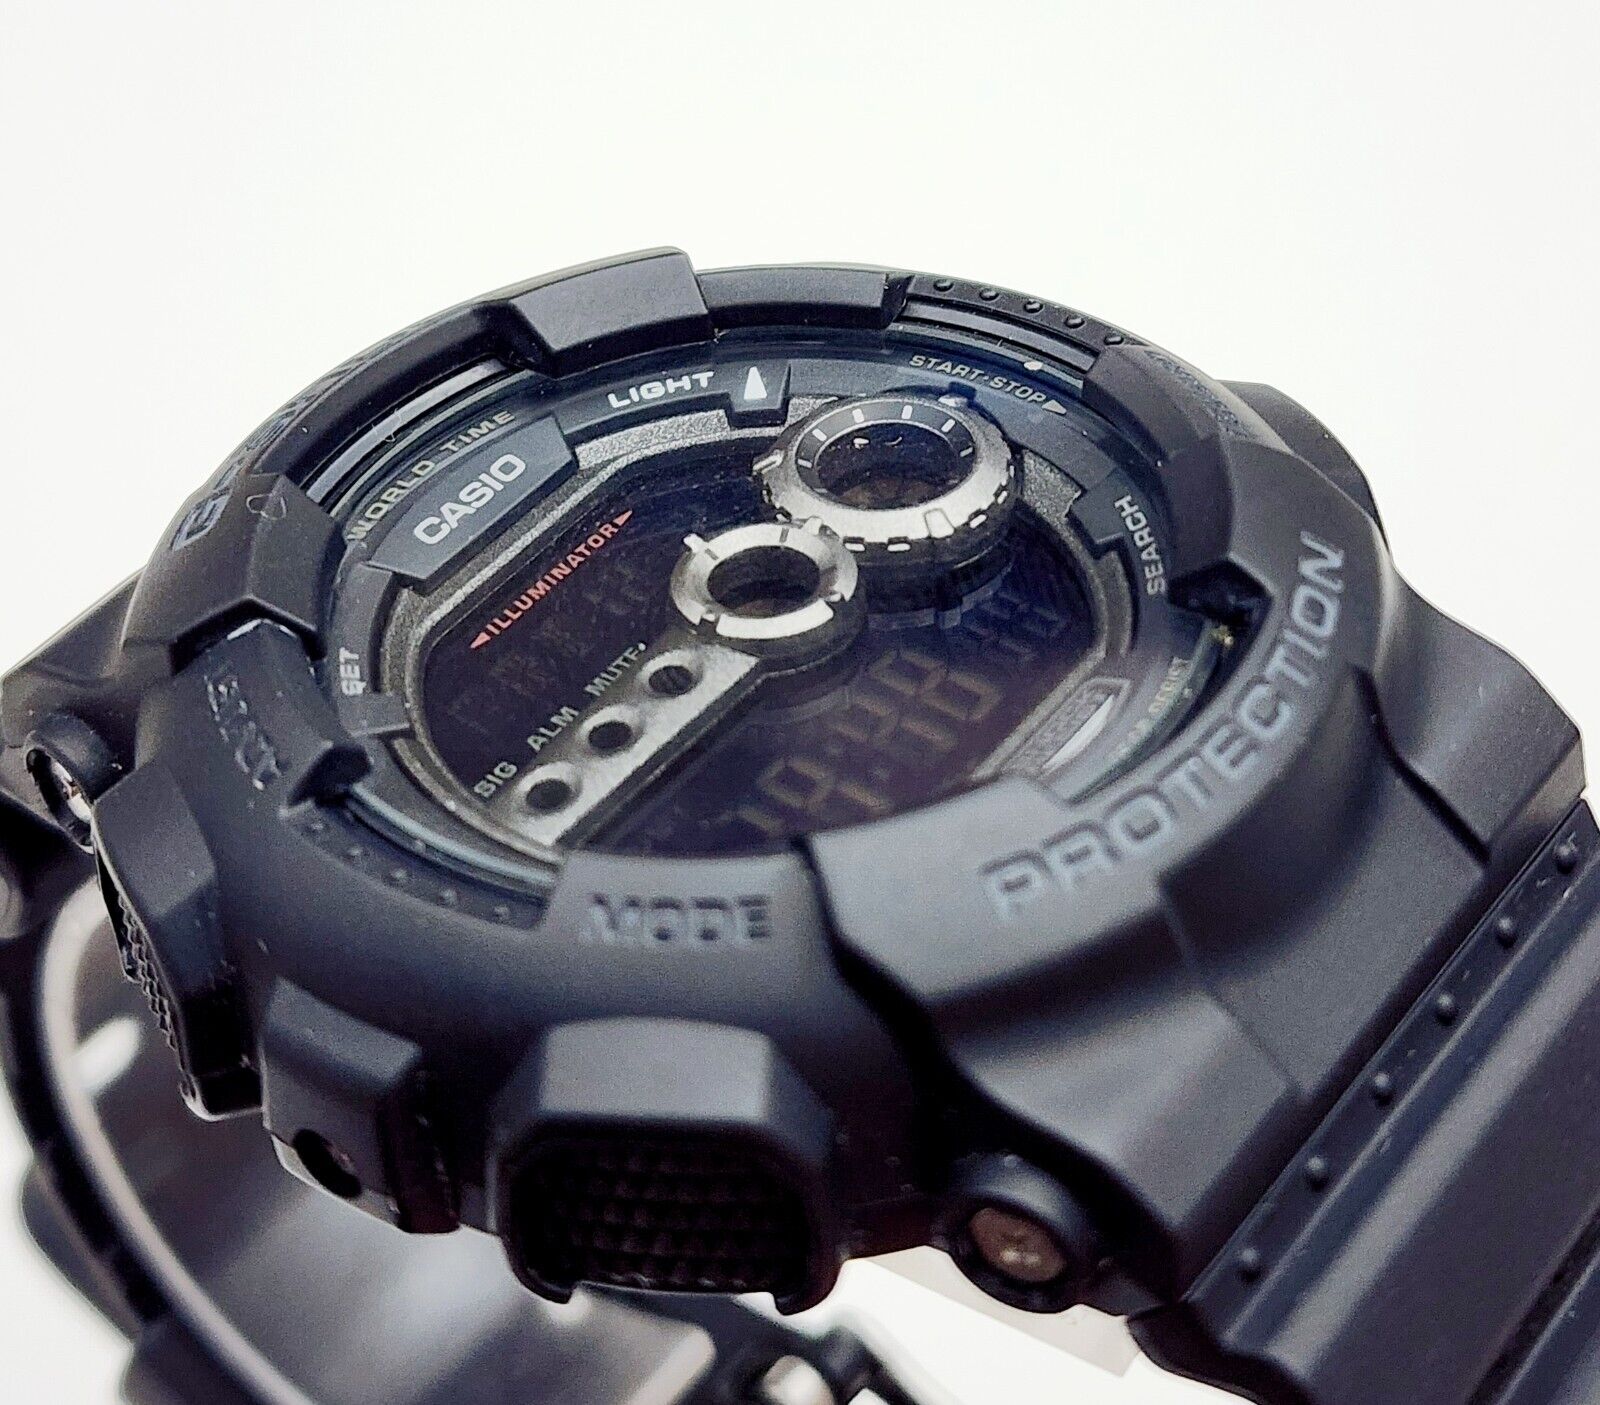 Casio G-shock 3263 Gd-100 Quartz Digital Watch for sale online | eBay